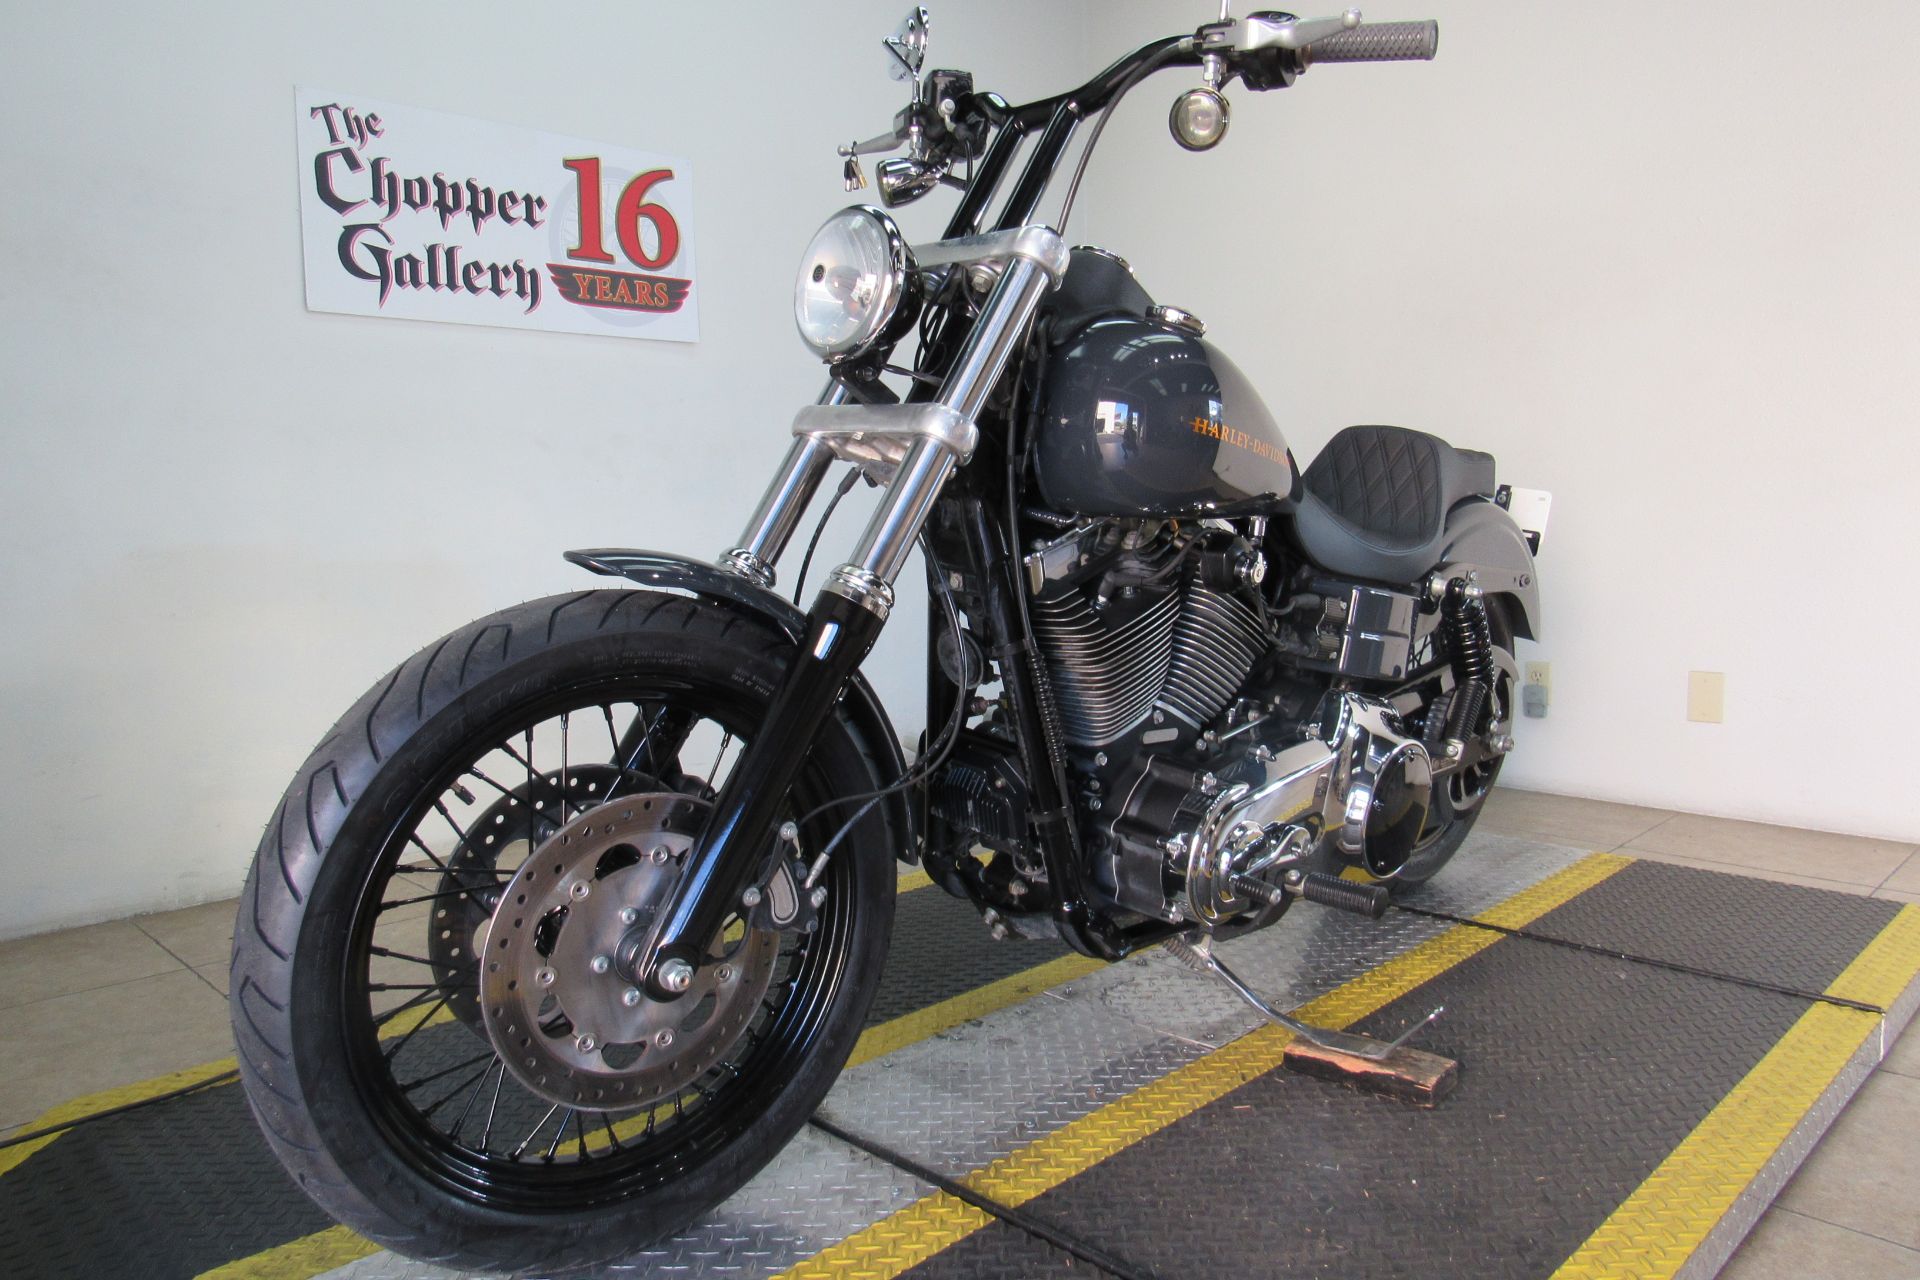 2014 Harley-Davidson Low Rider® in Temecula, California - Photo 32